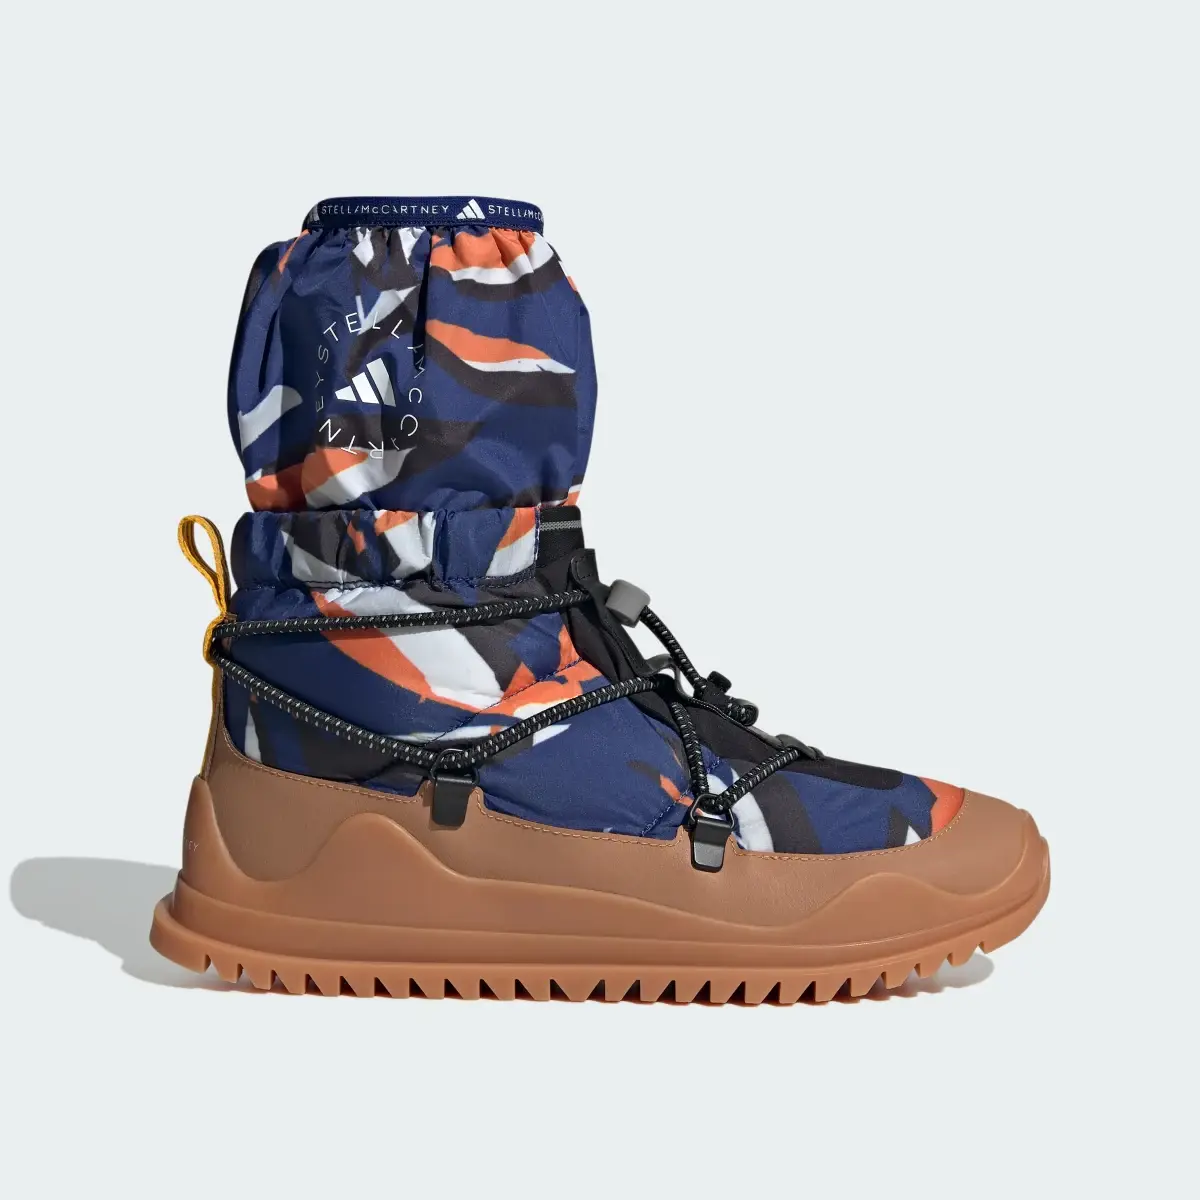 Adidas by Stella McCartney Winter Boots. 2